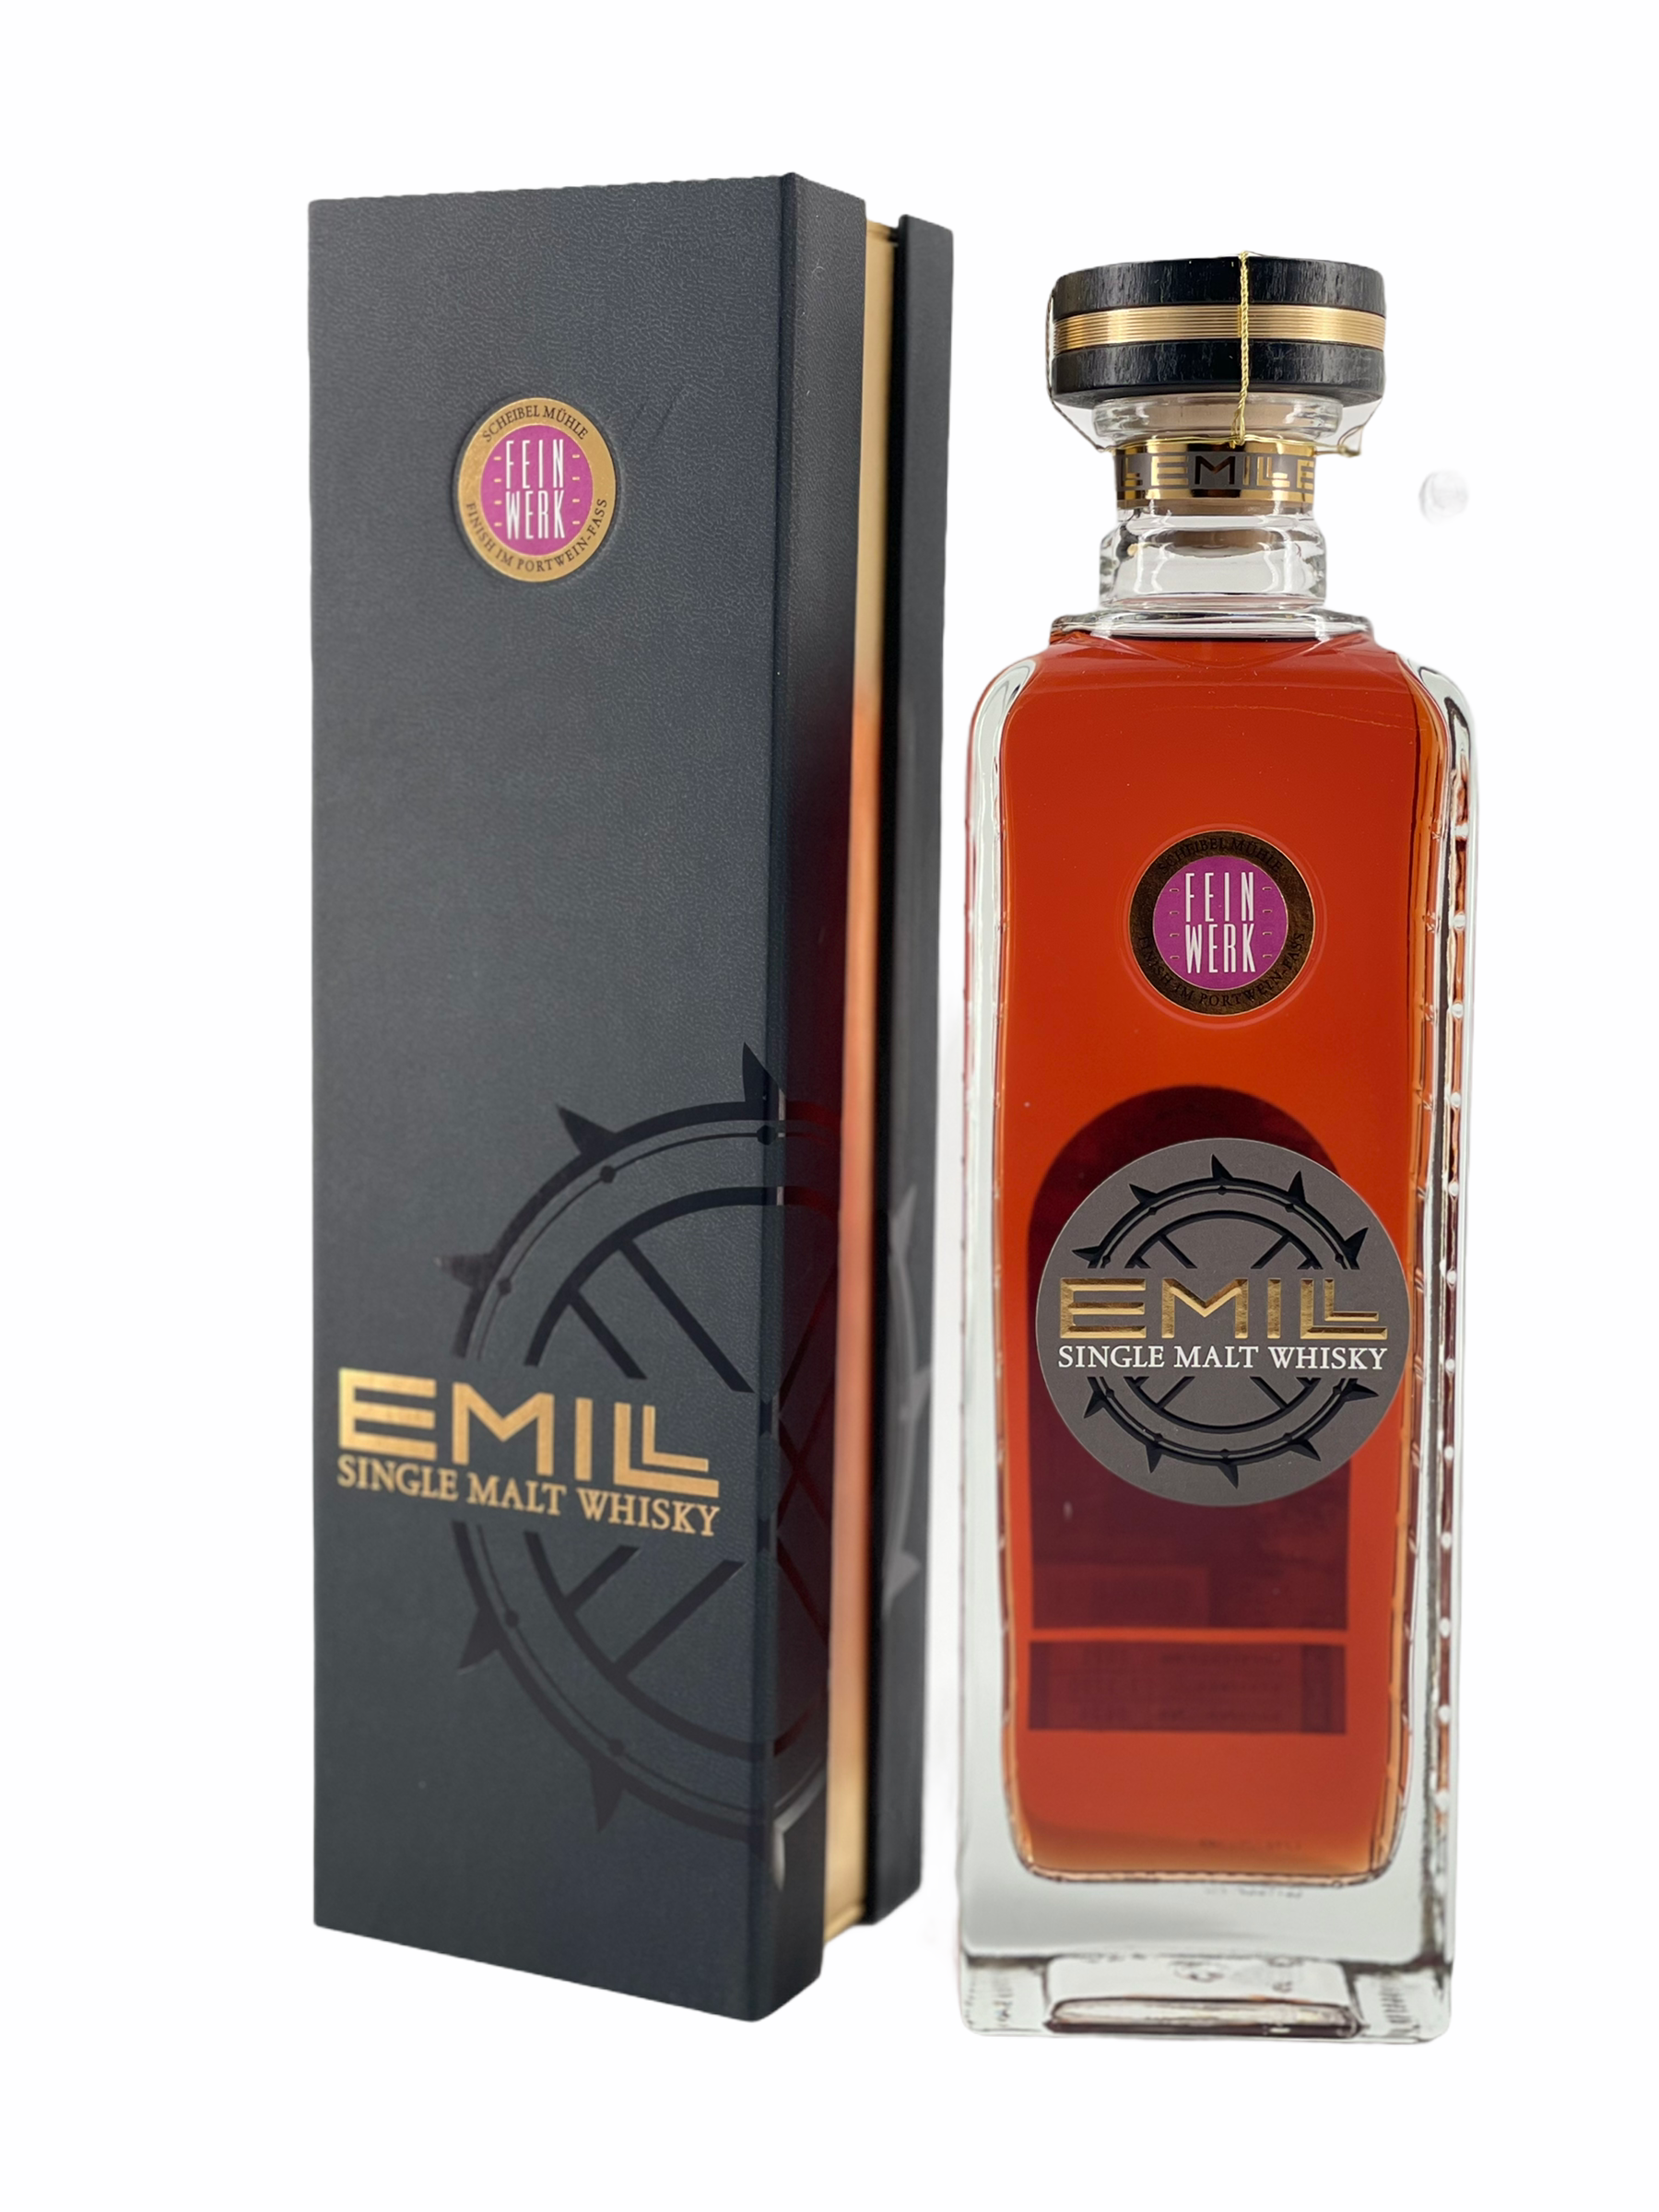 Scheibel Feinwerk Single Malt Whisky EMILL 42%vol. 0,7l inkl. edler Geschenkhülle